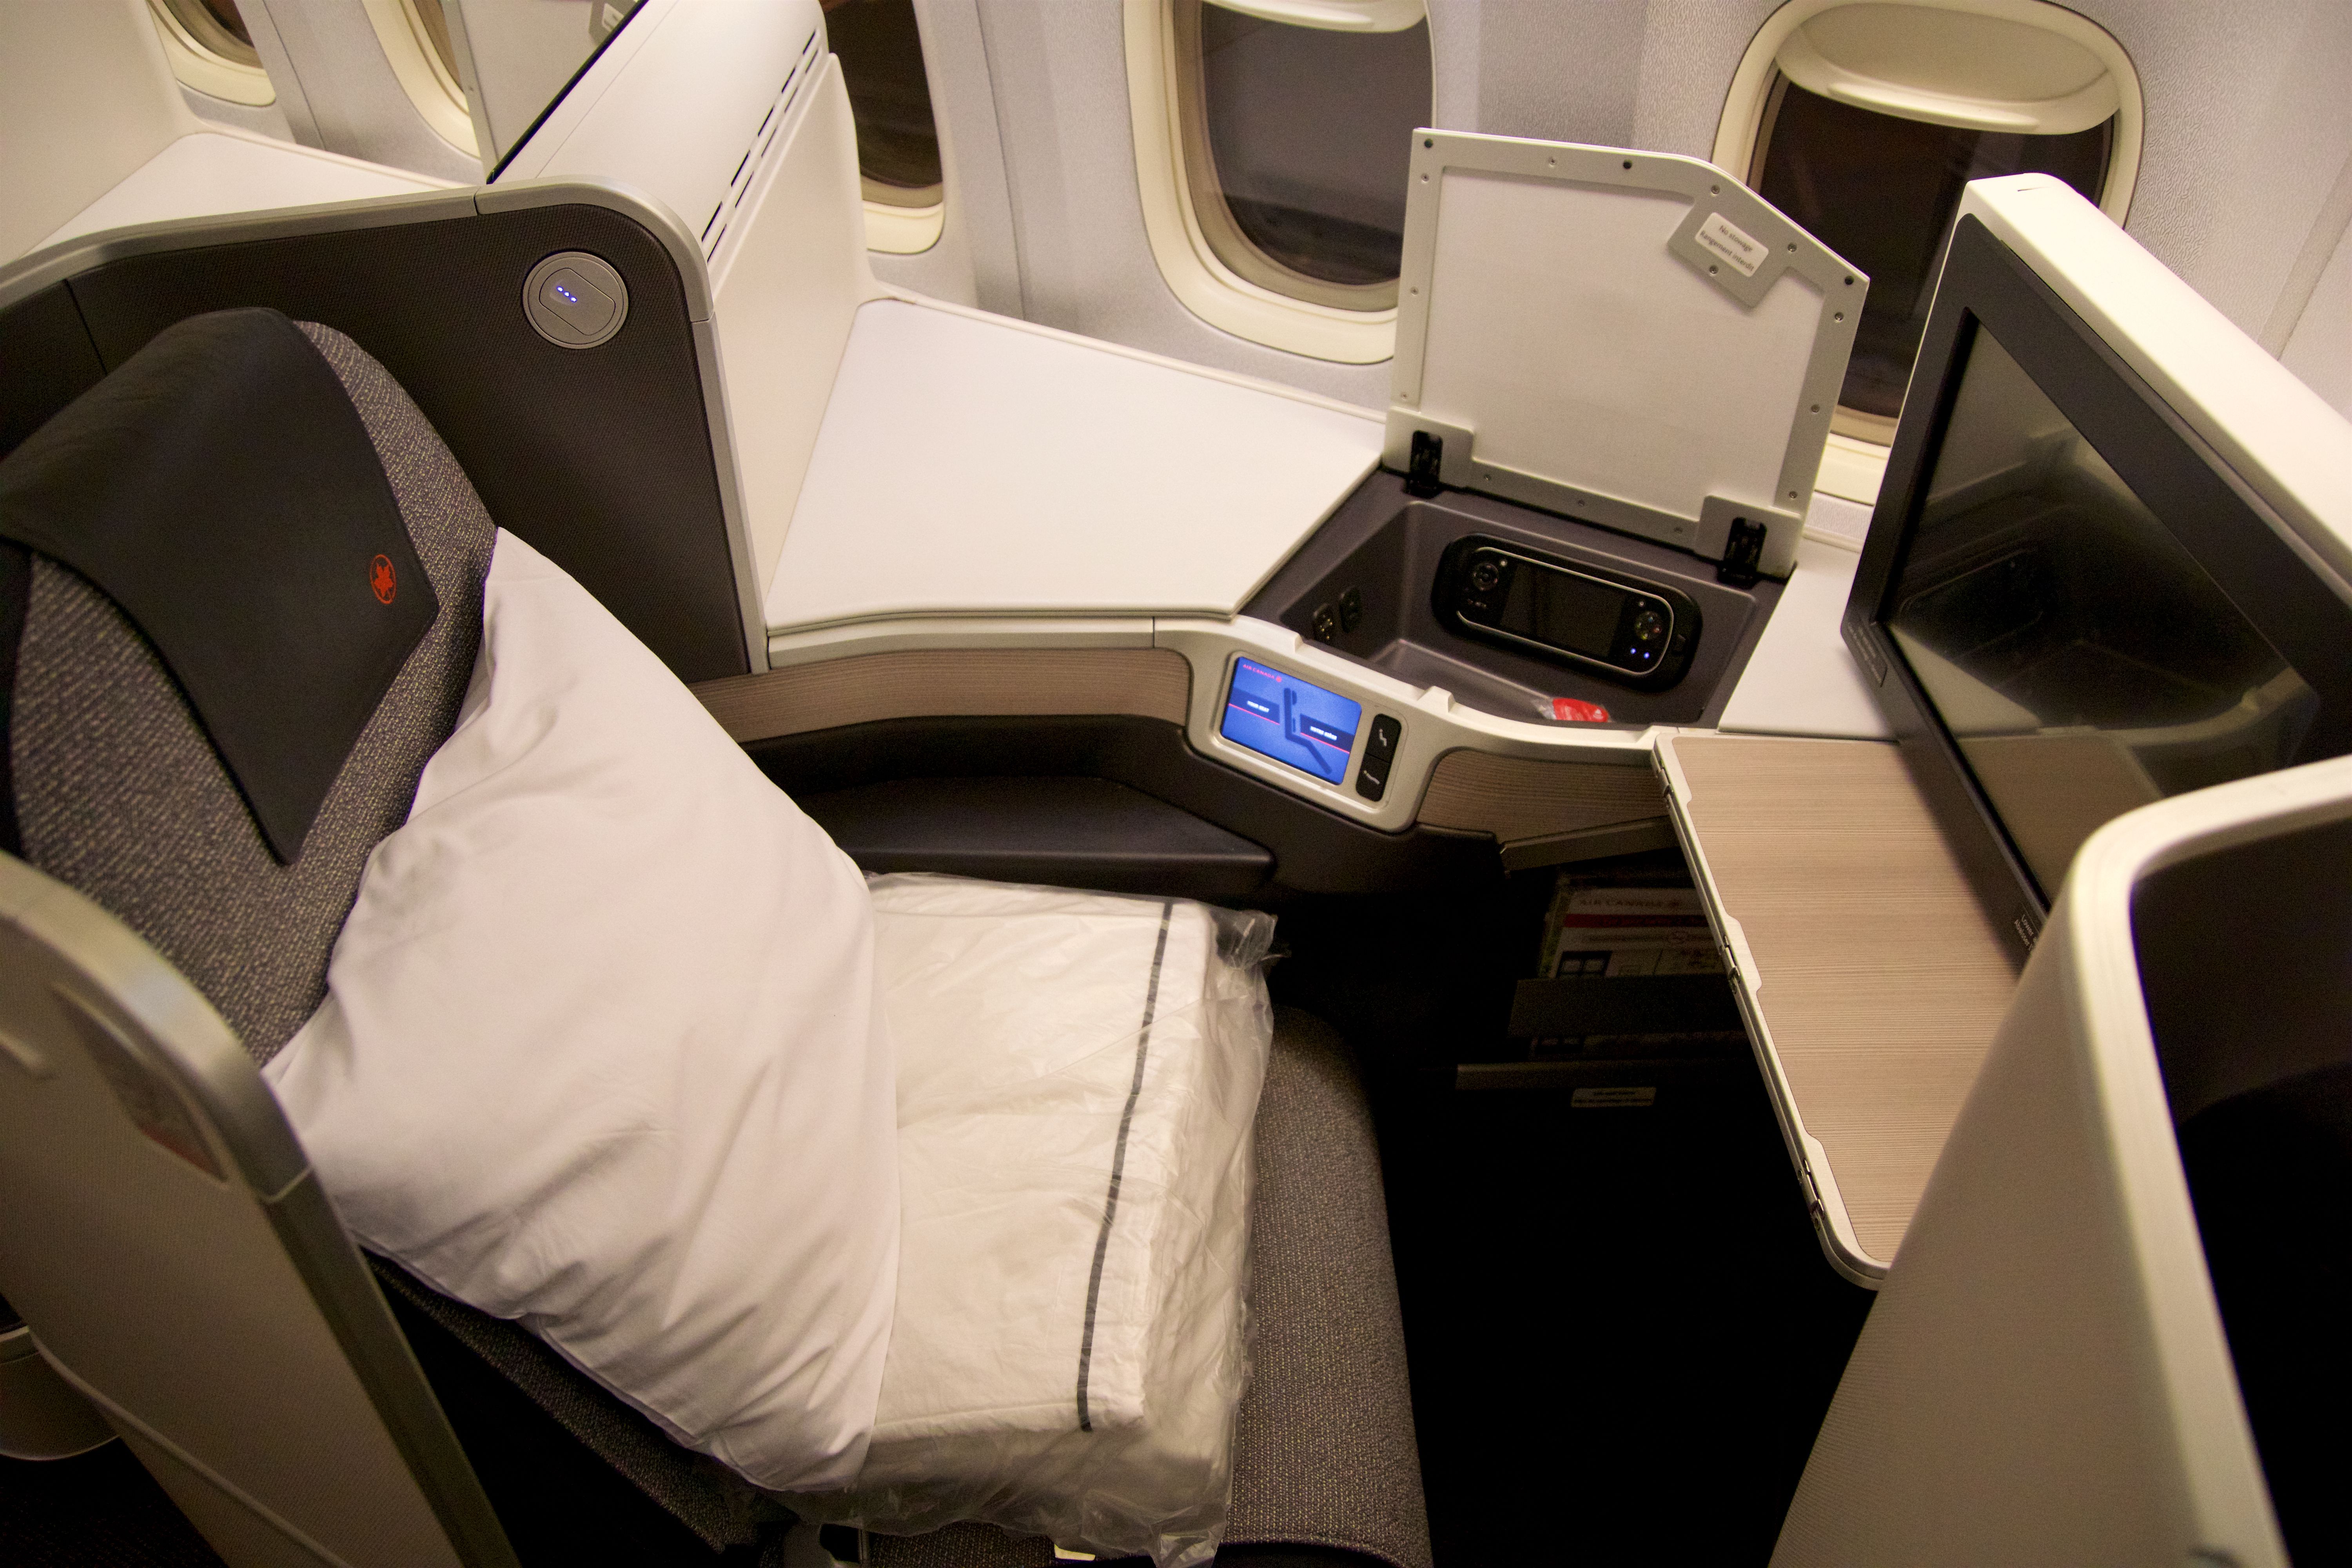 Air Canada 777 business class